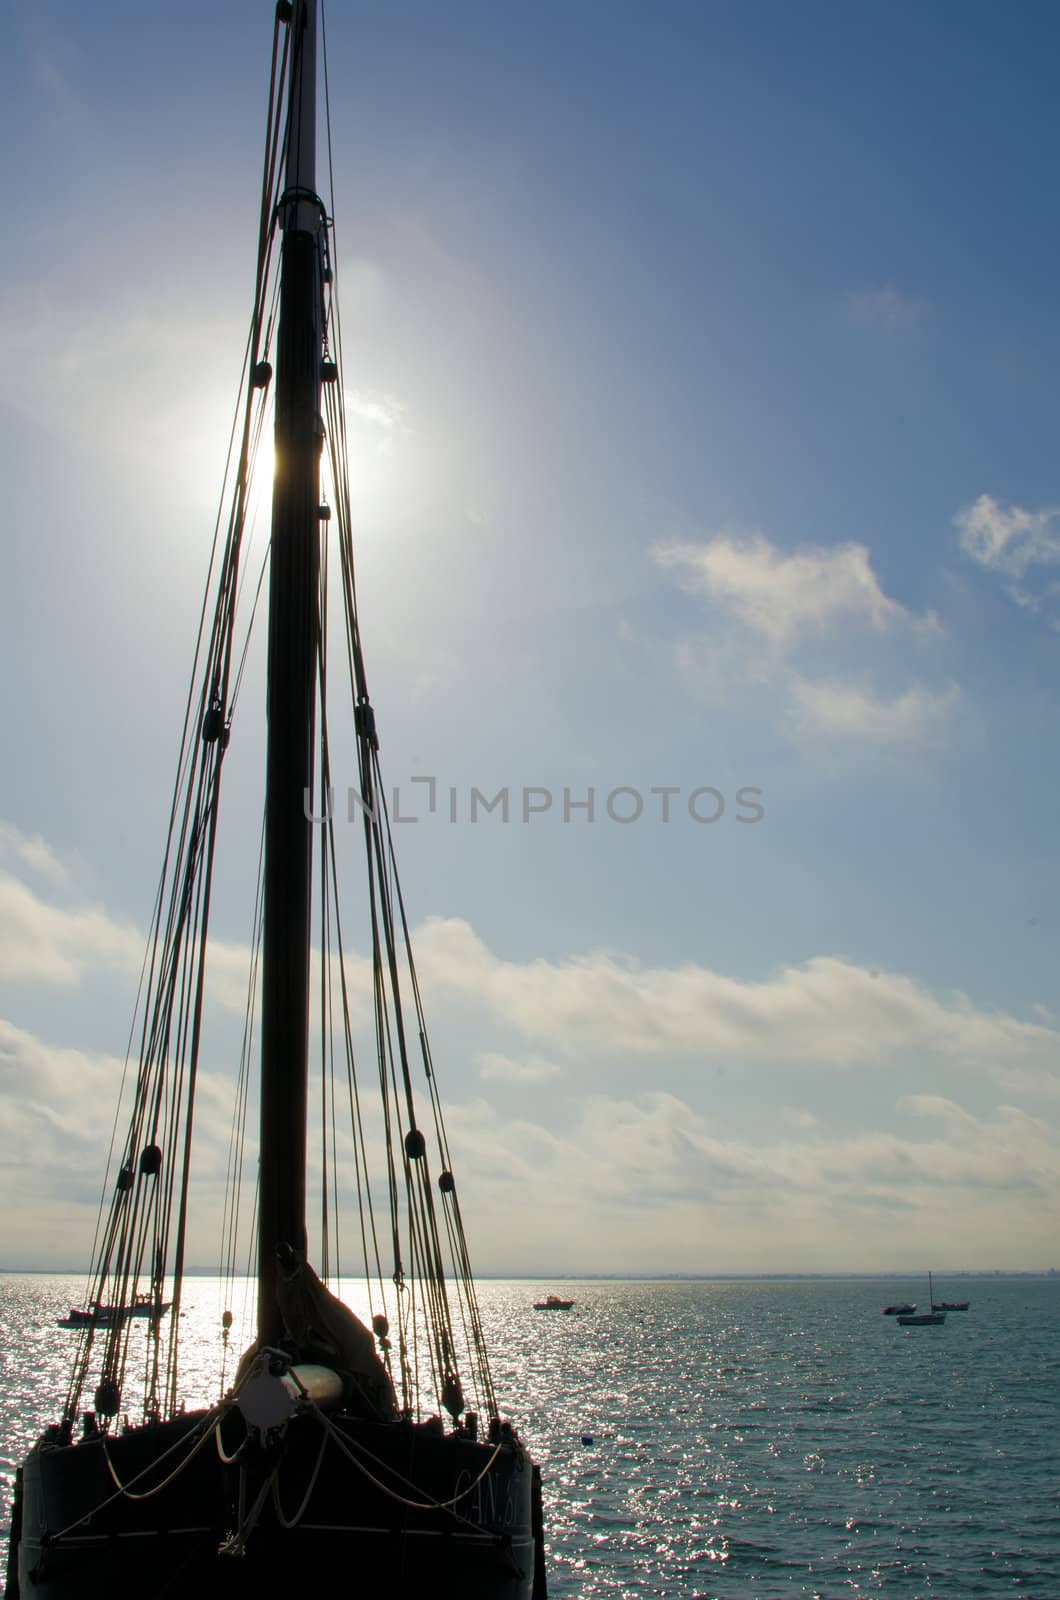 the old sailboat by njaj